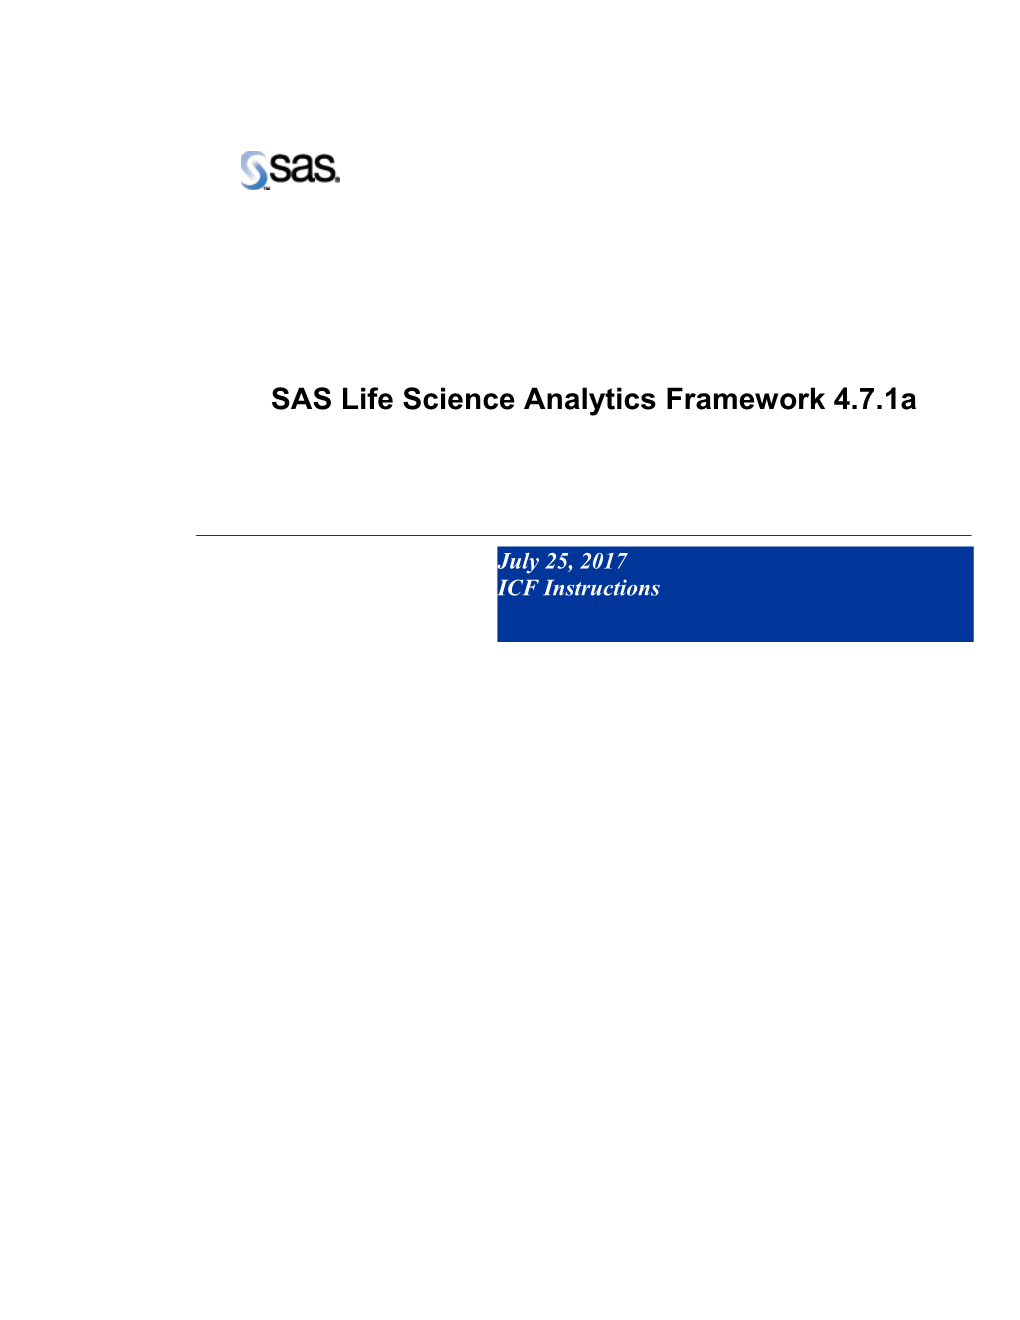 SAS Life Science Analytics Framework 4.7.1A, Installation Instructions